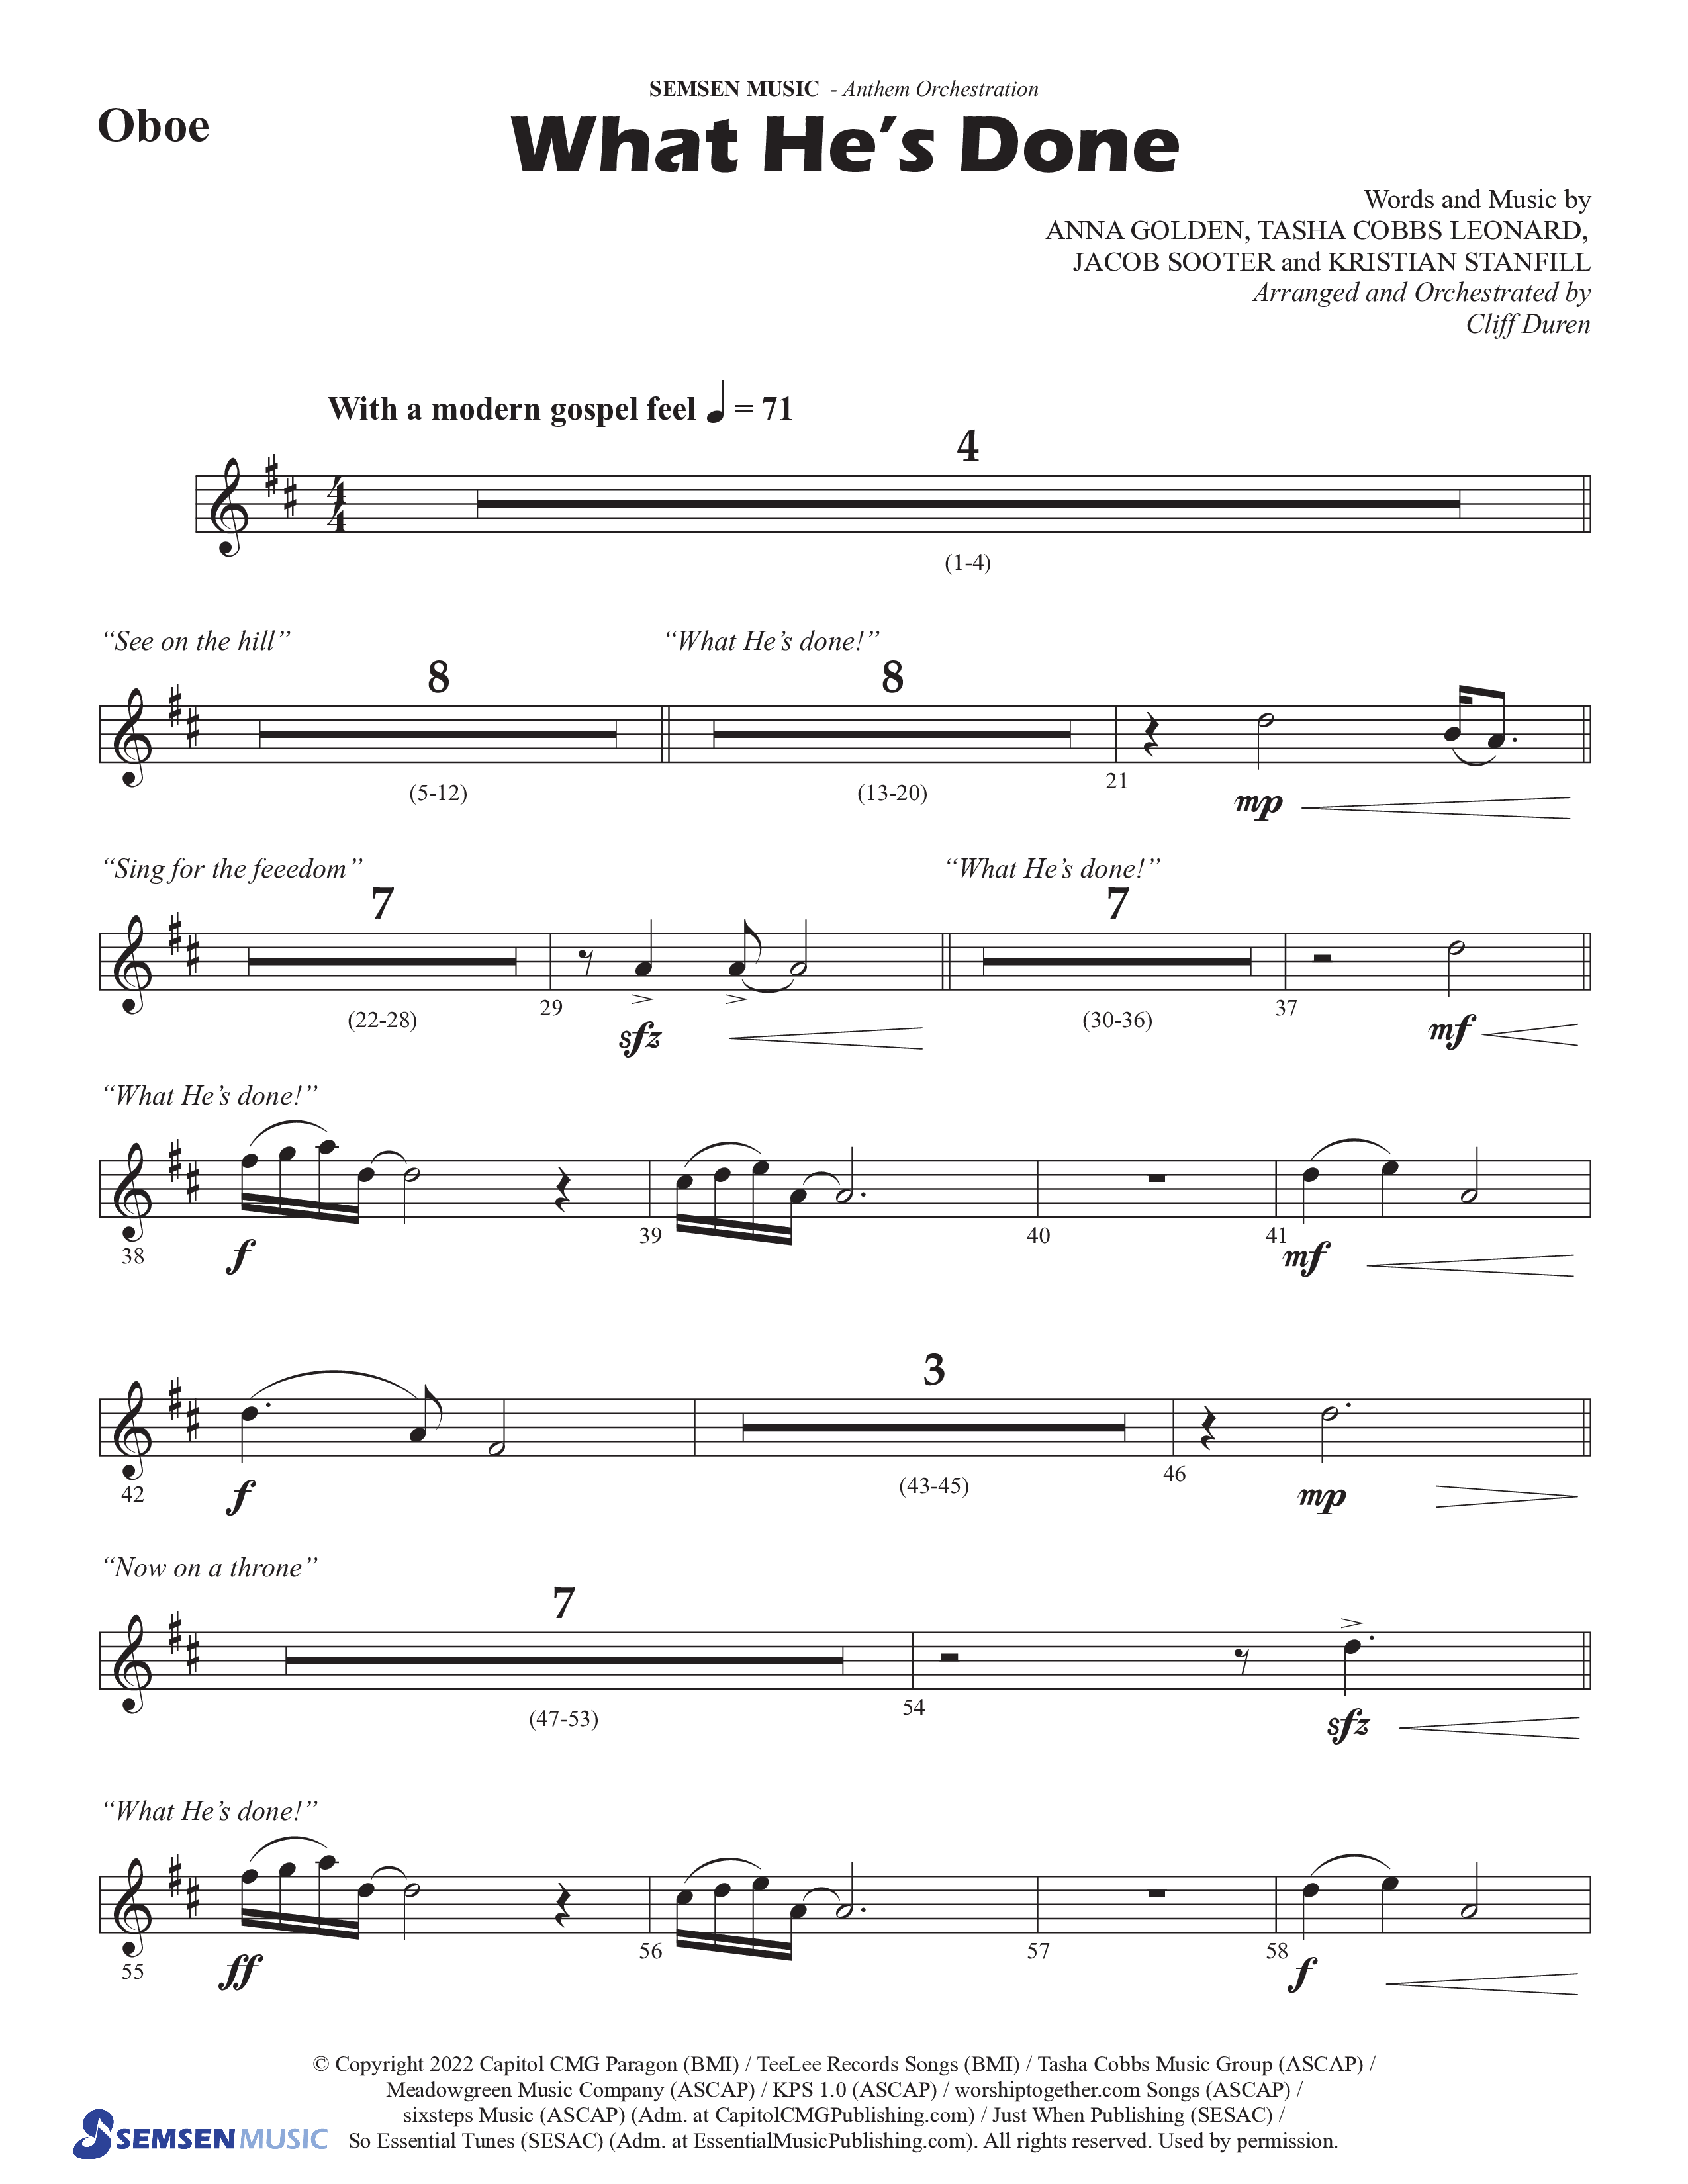 What He's Done (Choral Anthem SATB) Oboe (Semsen Music / Arr. Cliff Duren)